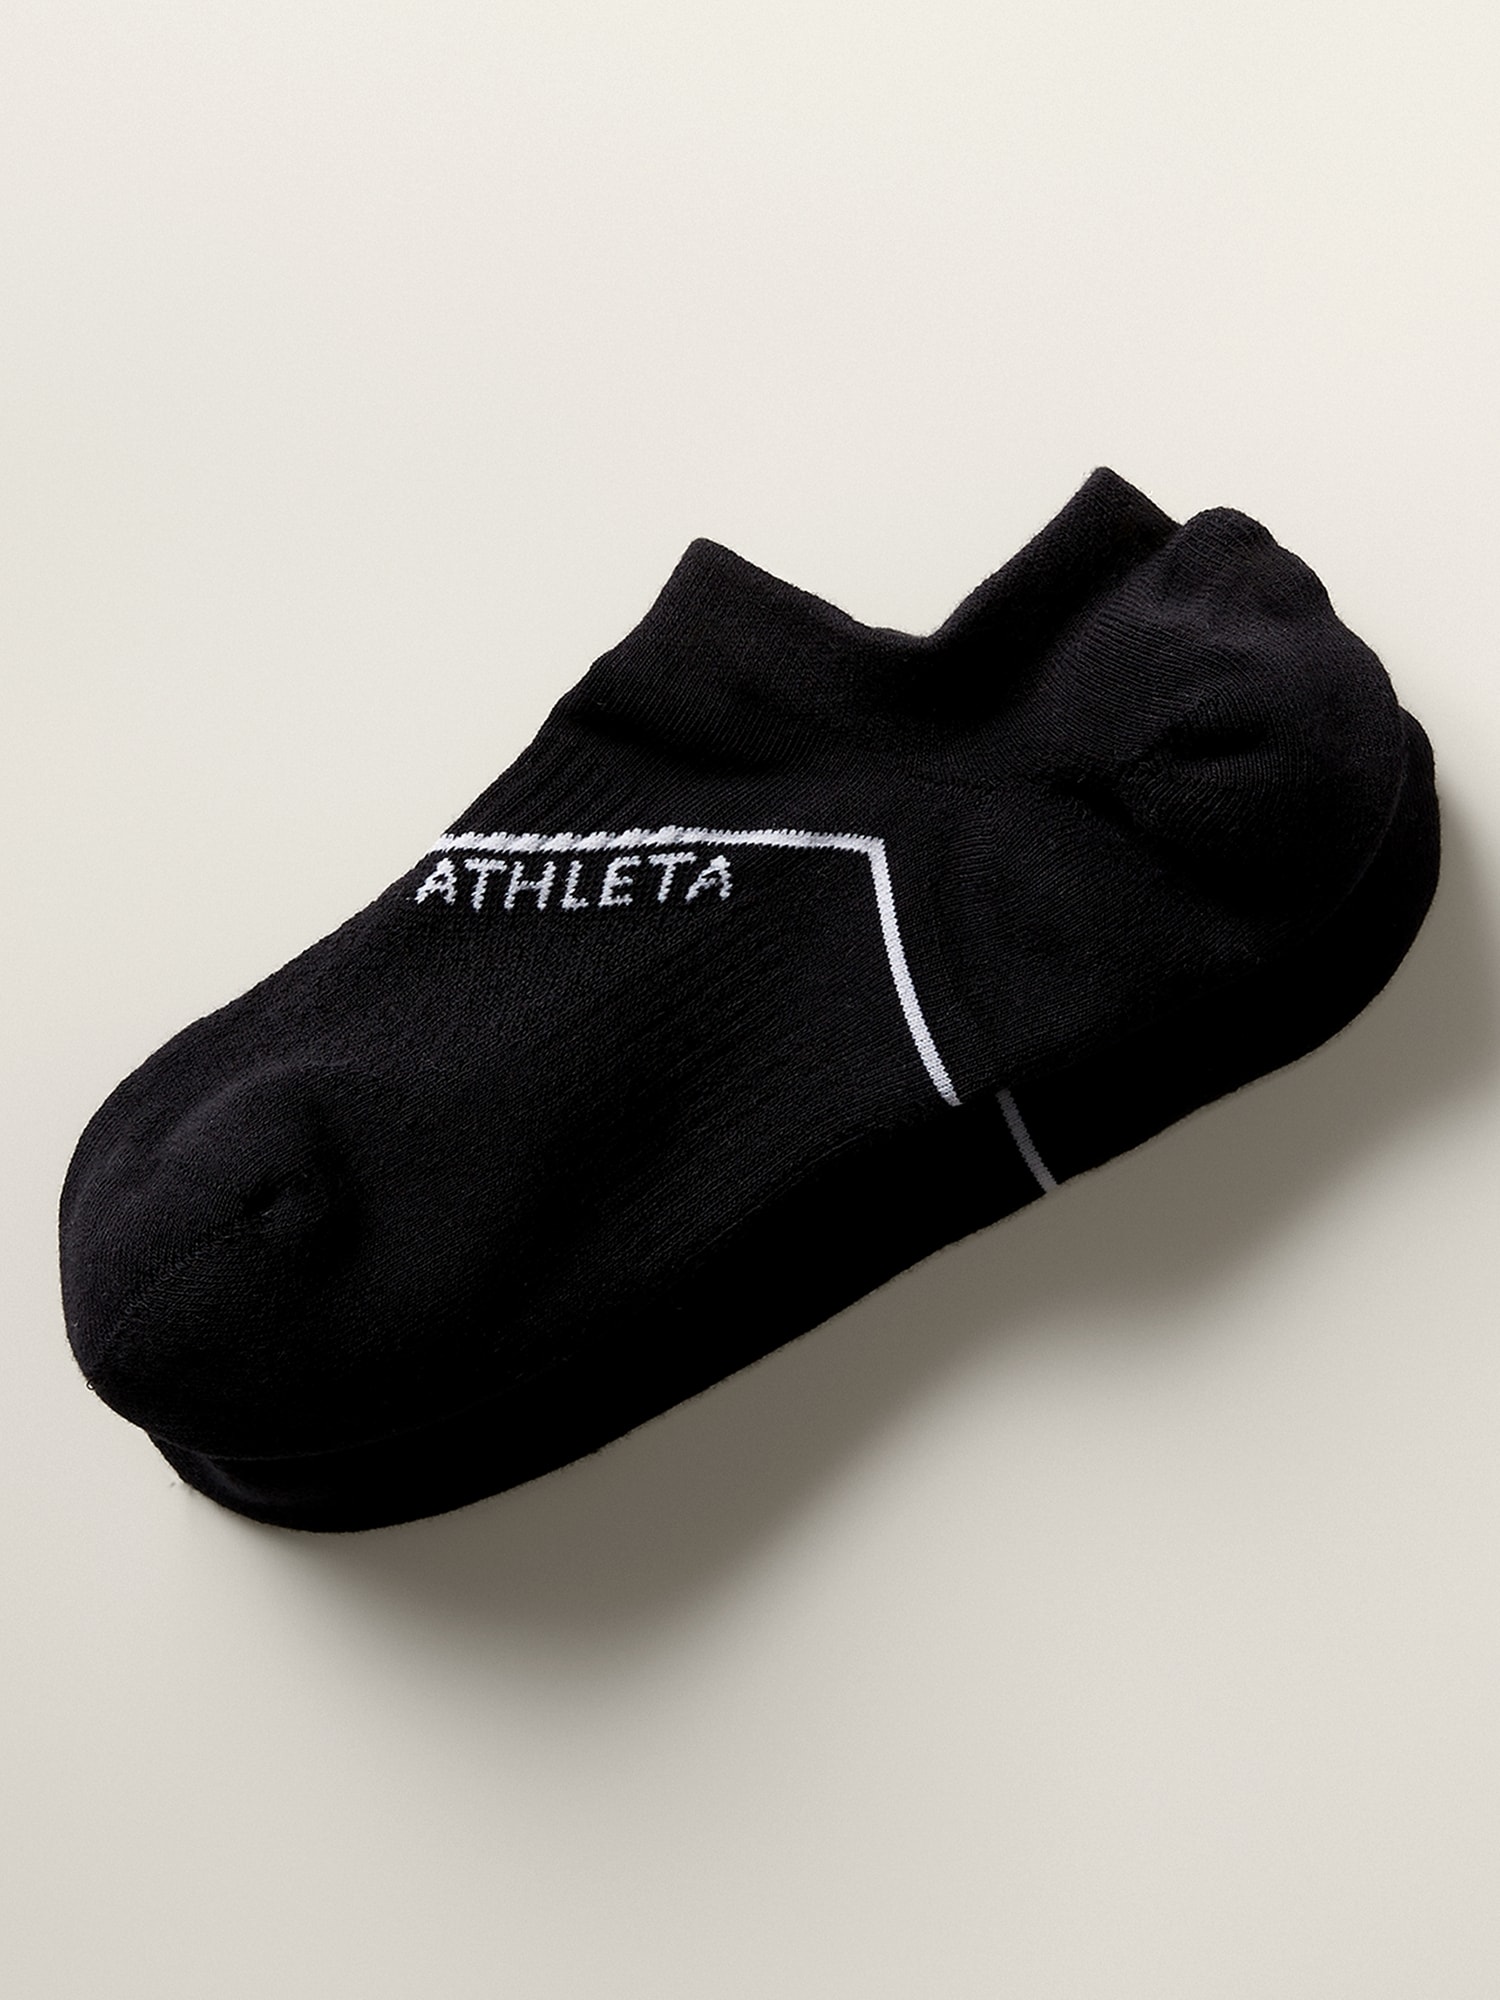 harmtty 1Pair Sports Socks Sweat-absorbent Comfortable Nylon